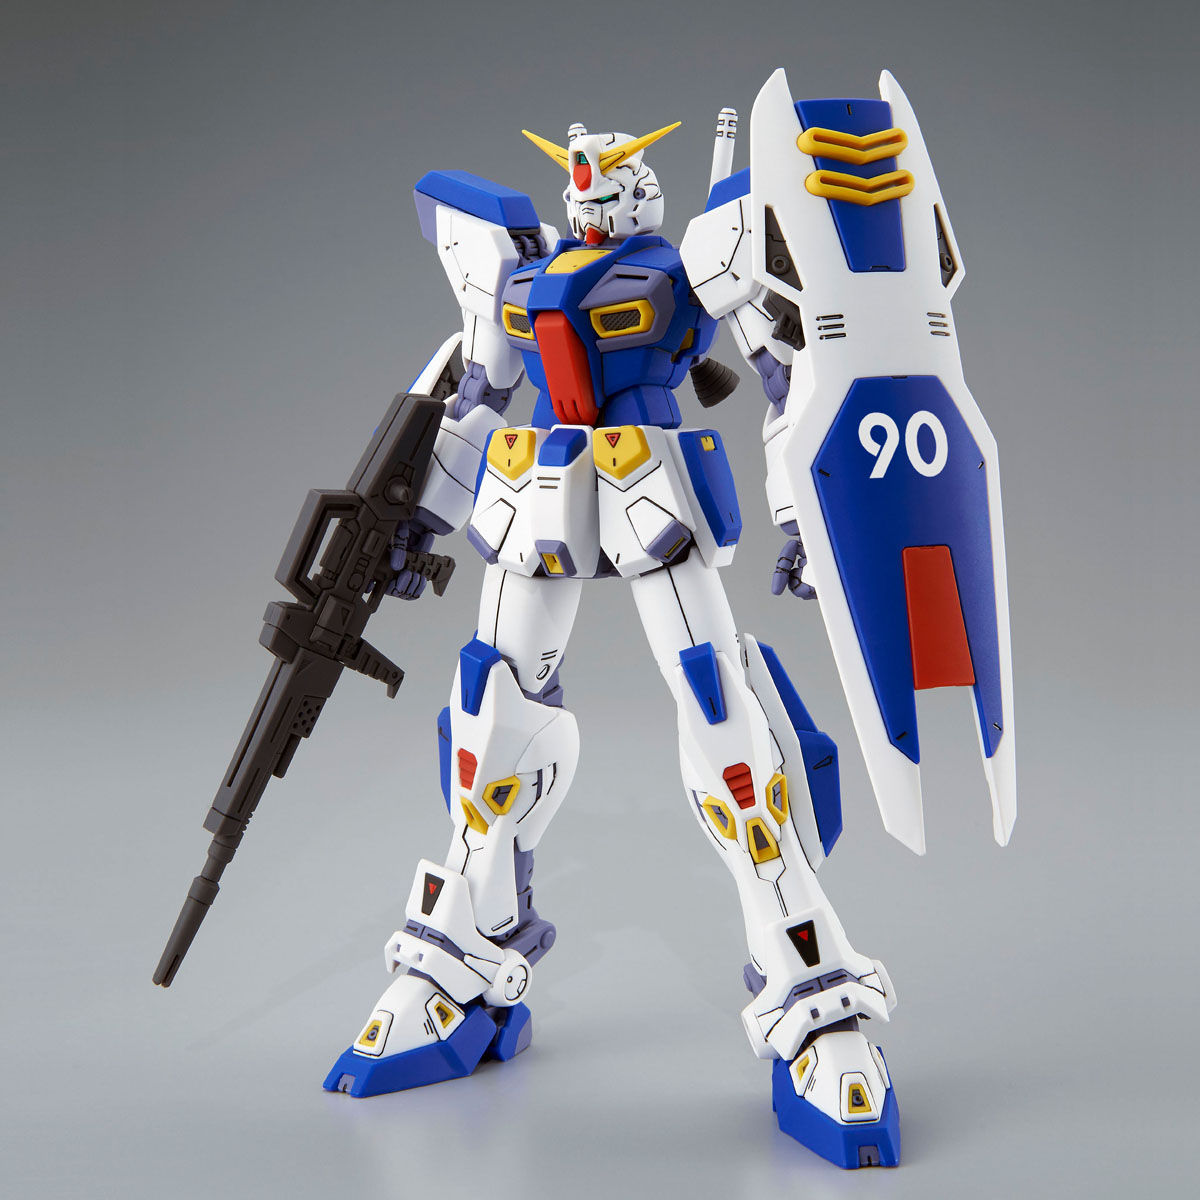 MG 1/100 Formula 90 Gundam F90